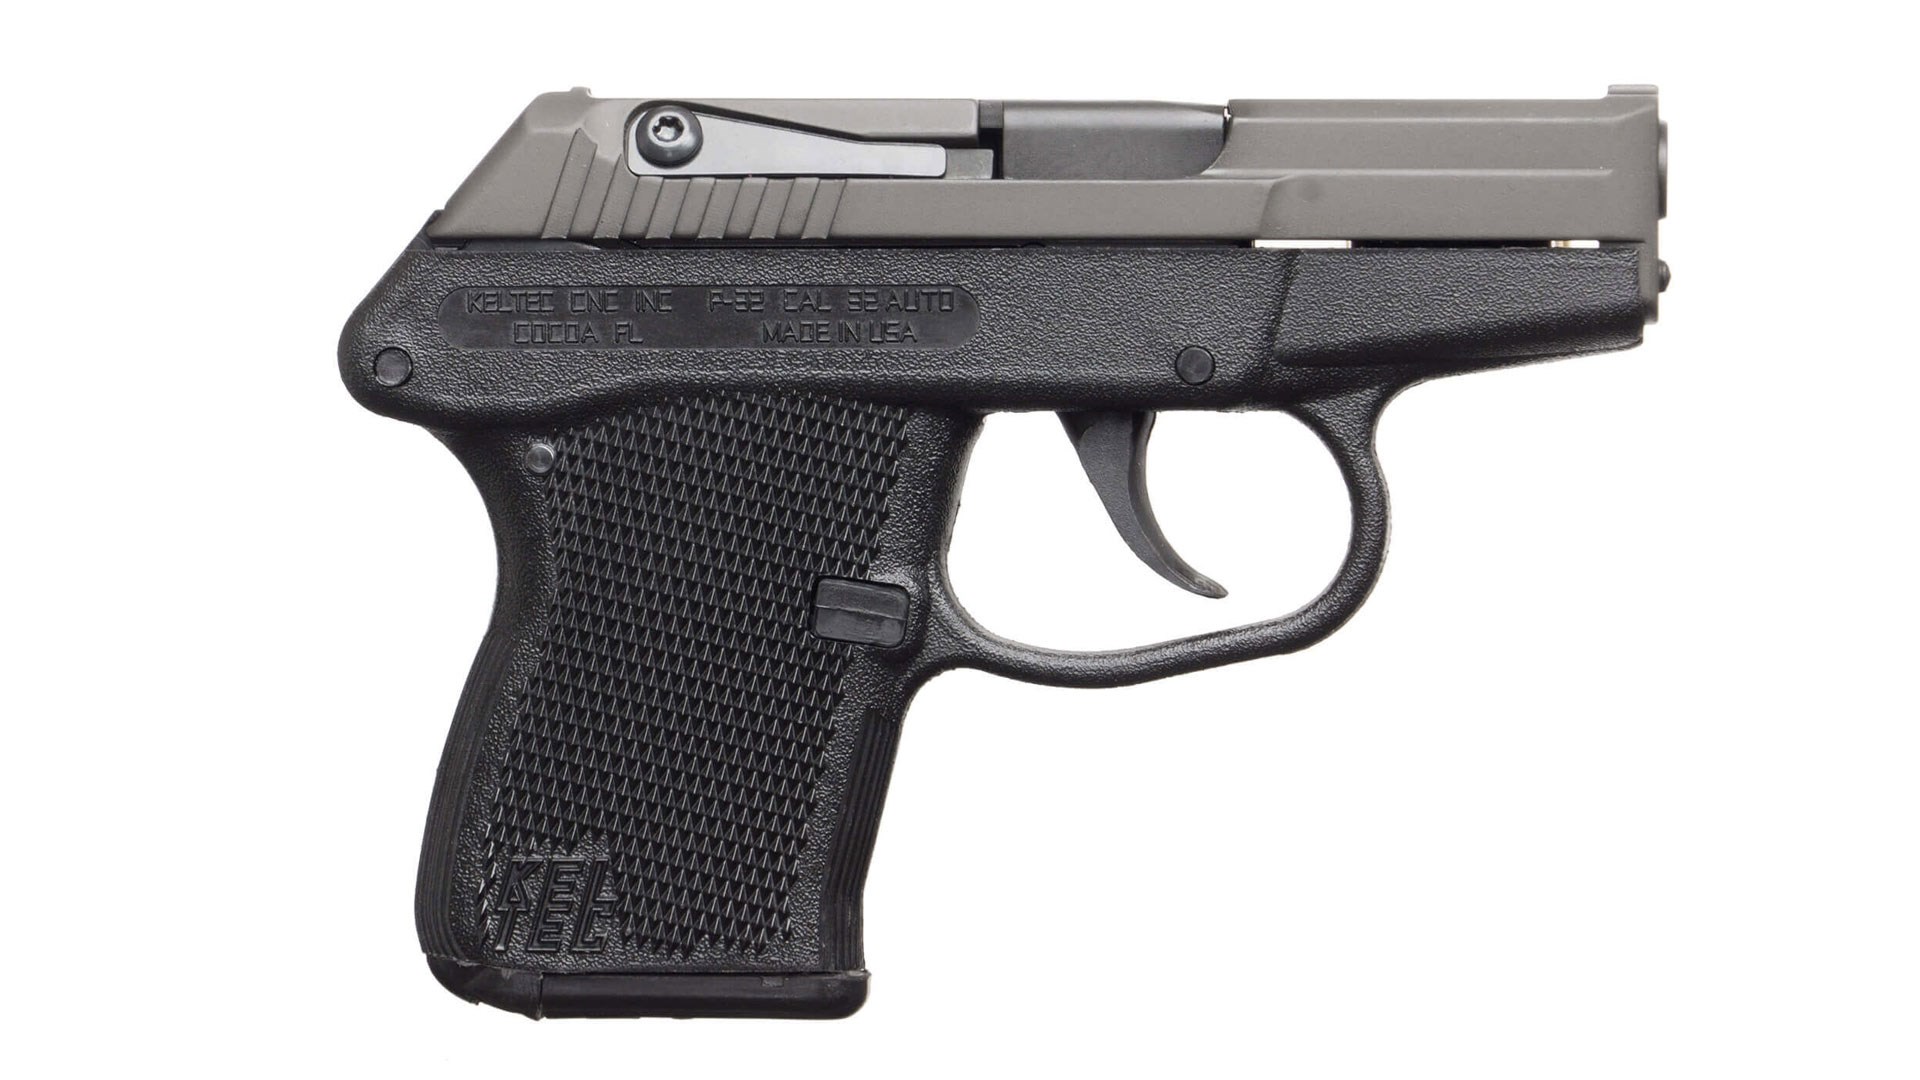 Keltec P32 small black pistol handgun right side view